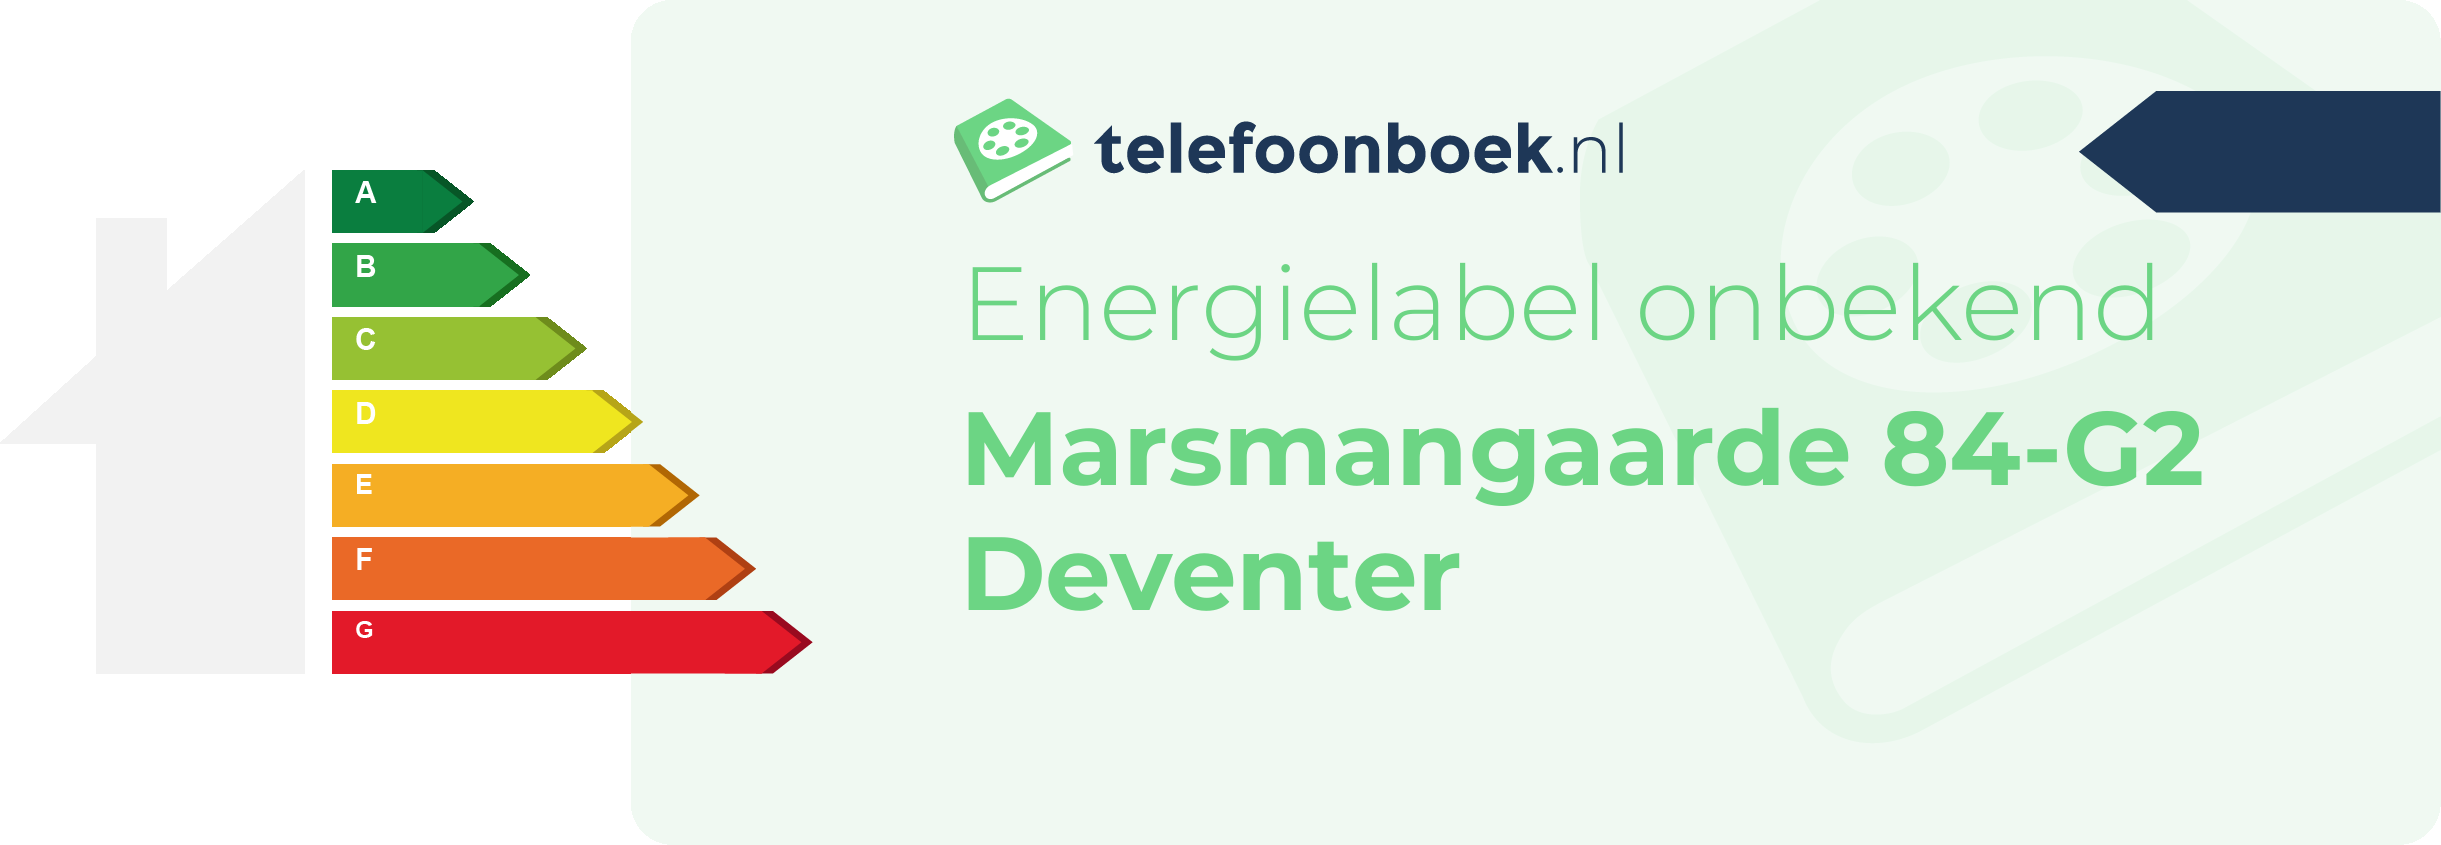 Energielabel Marsmangaarde 84-G2 Deventer